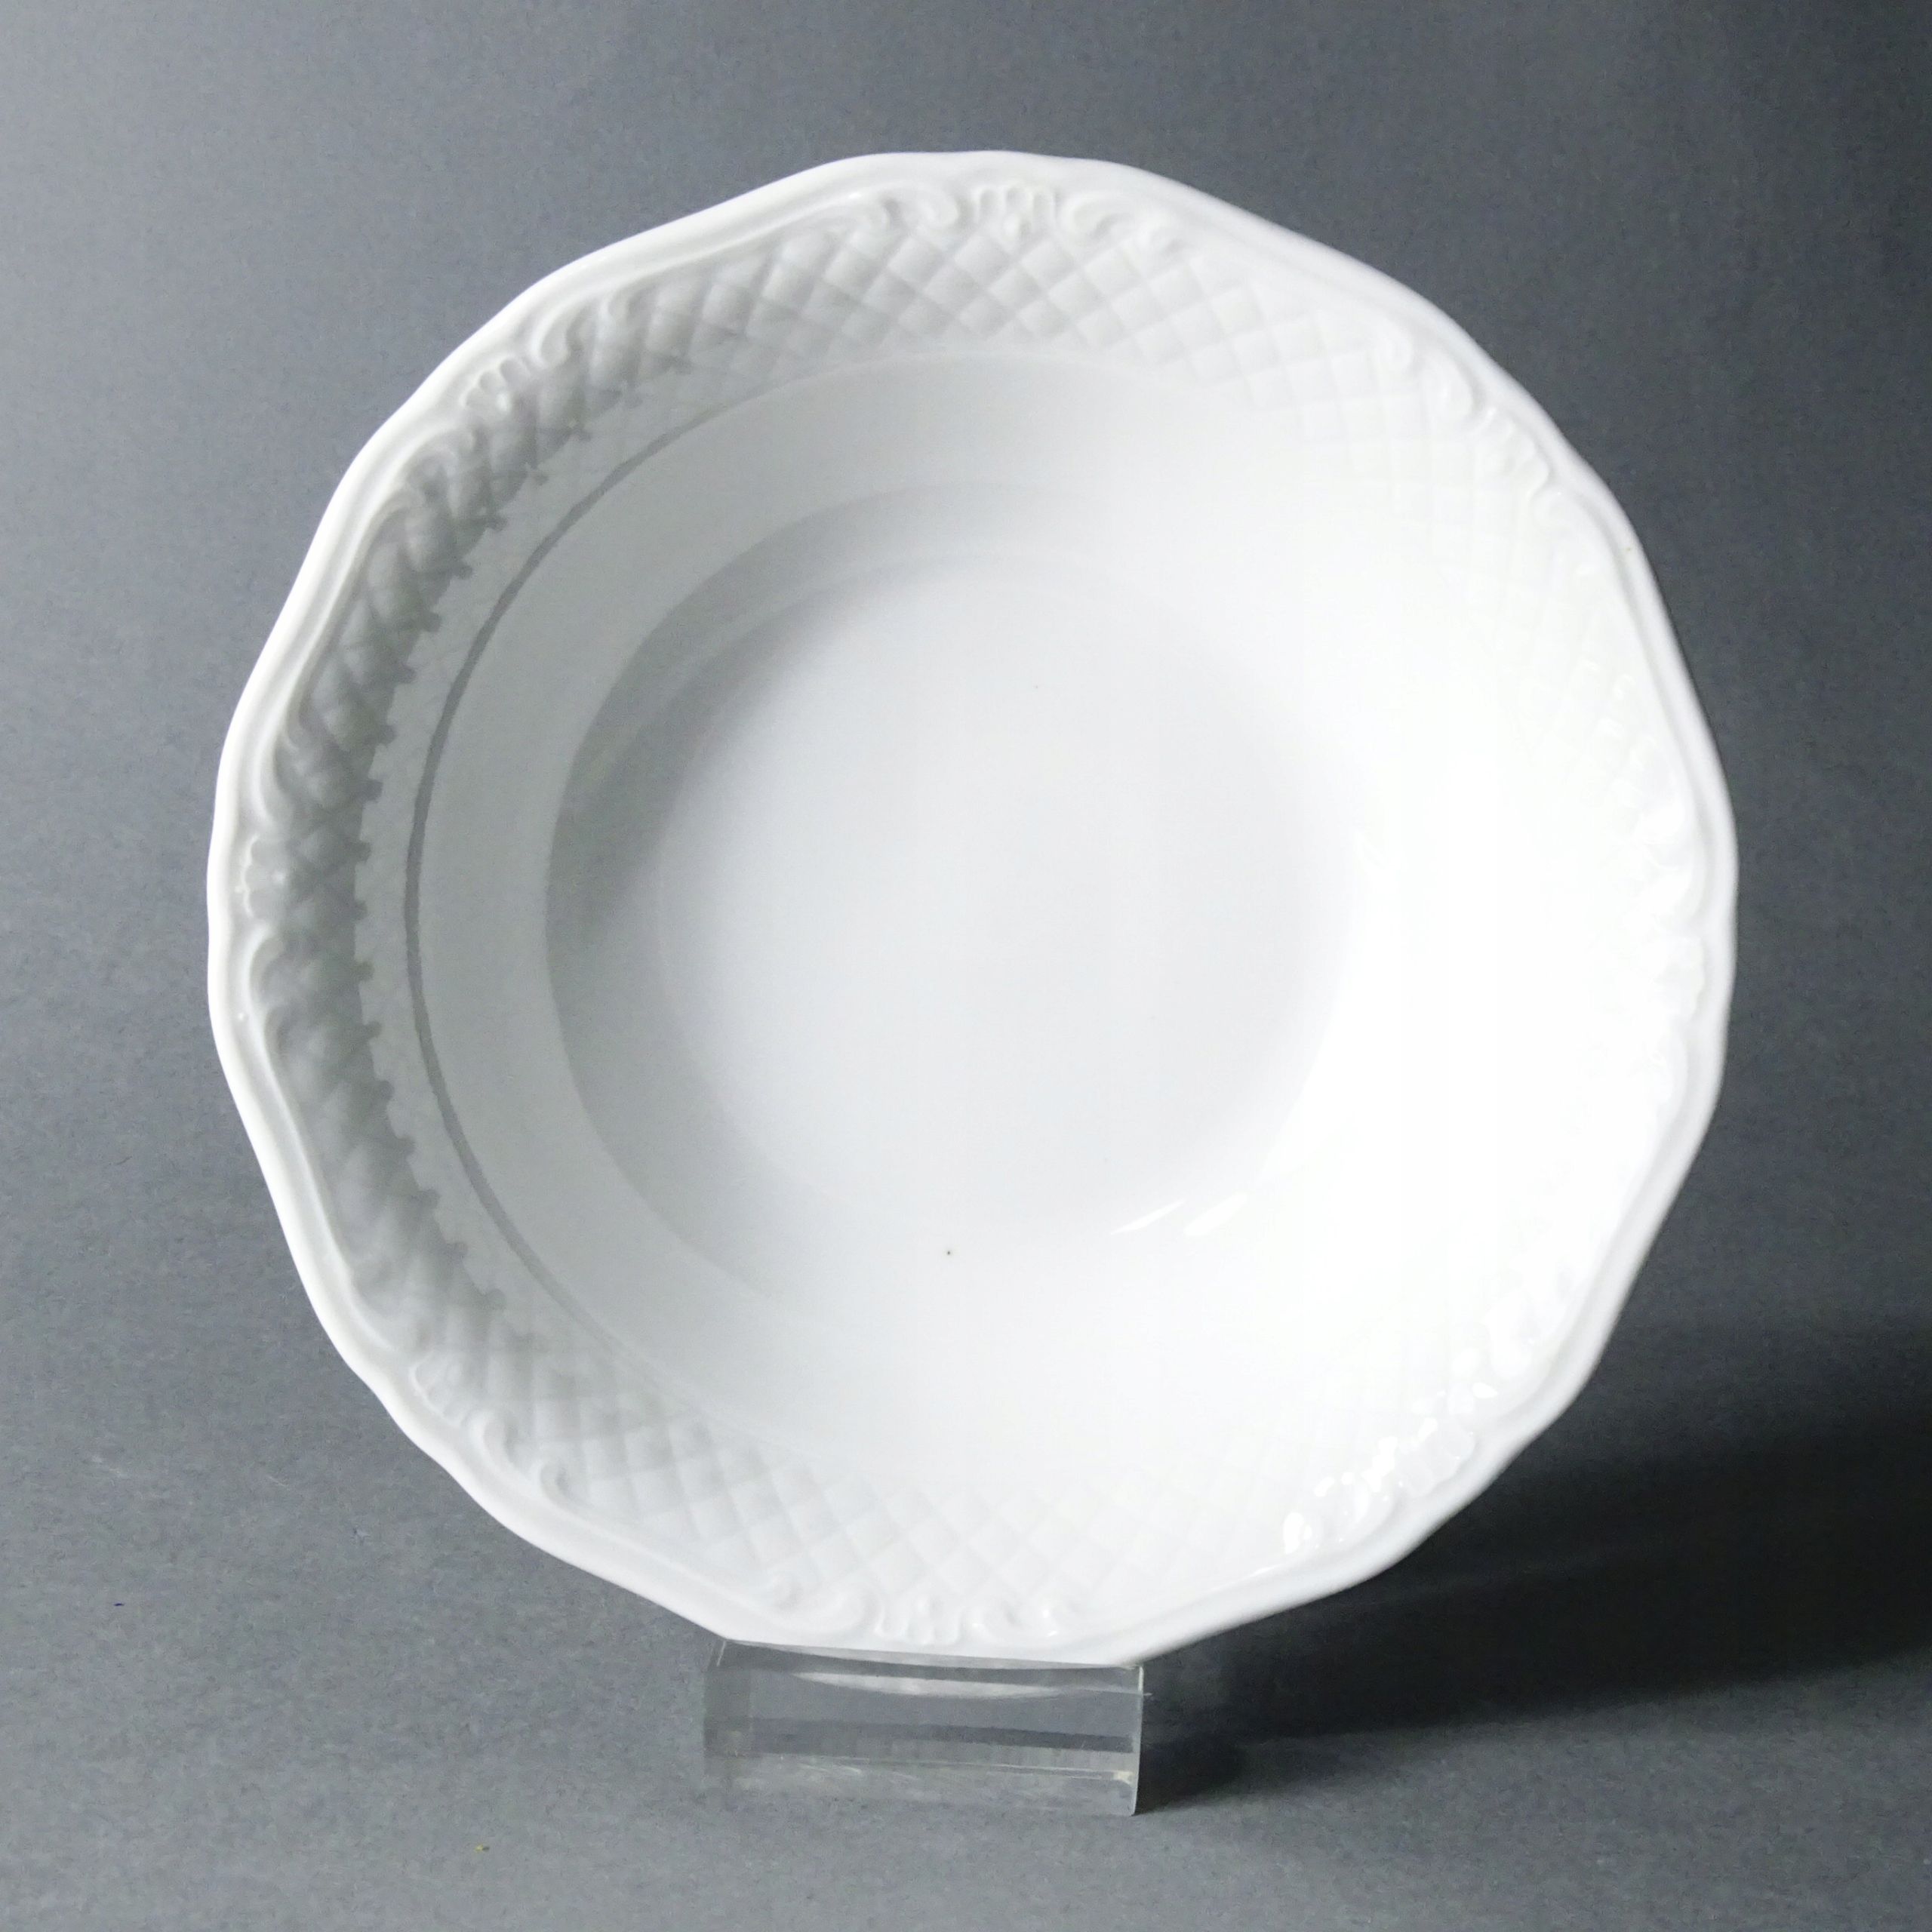 biała miseczka salaterka paterka porcelanowa eschenbach